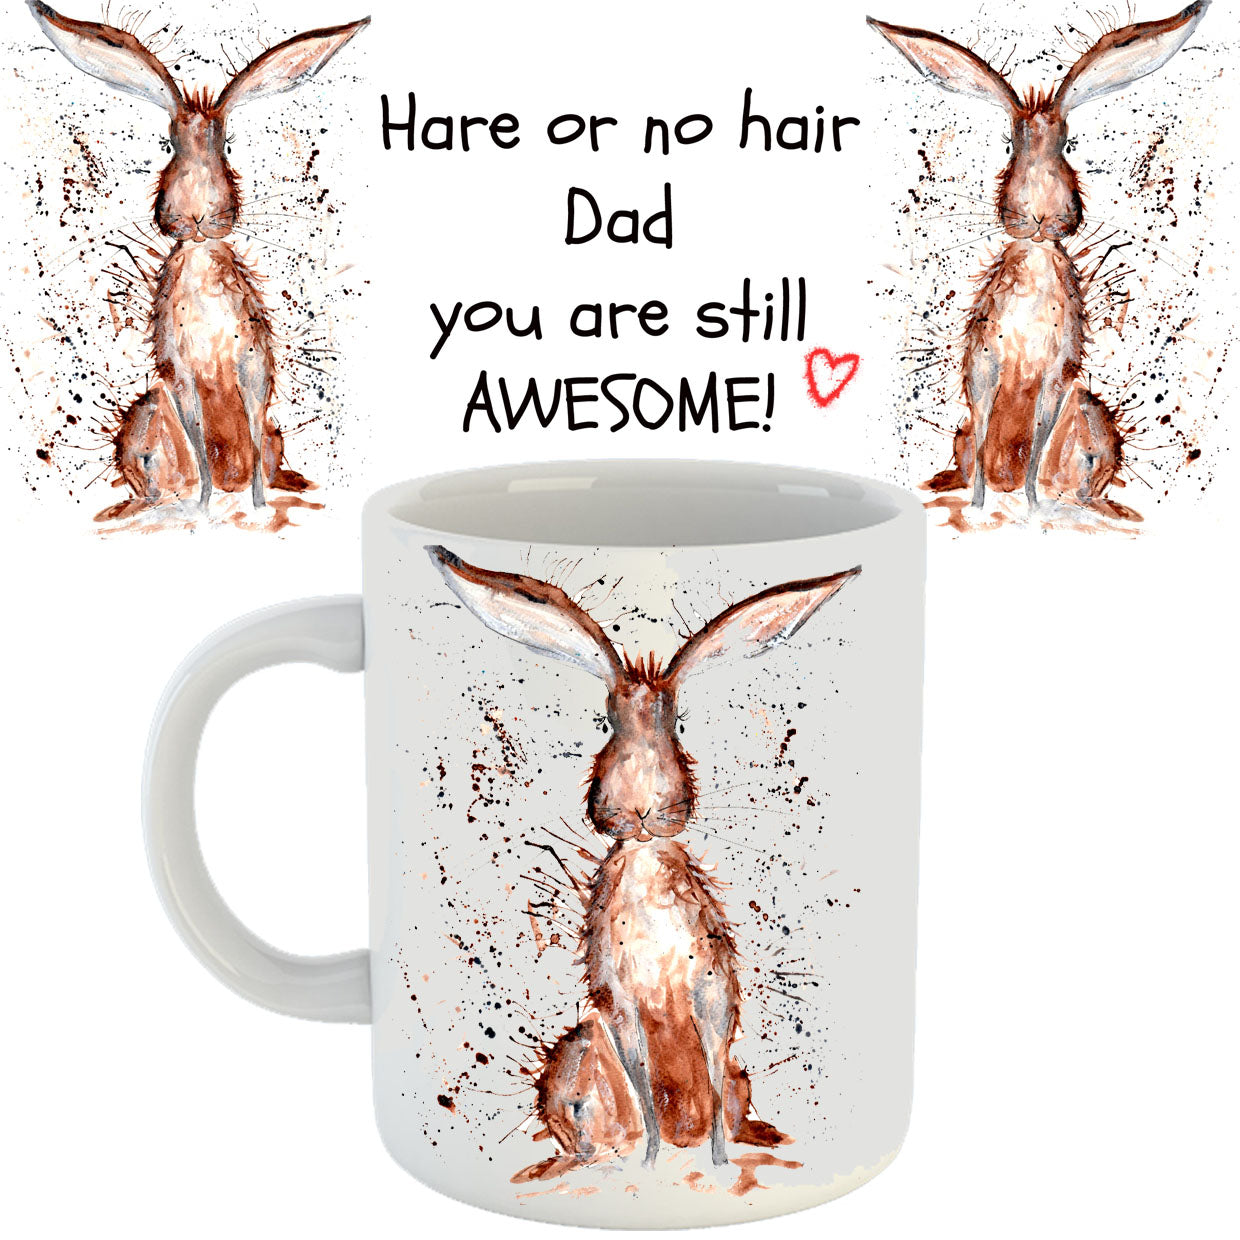 Dad hare mug